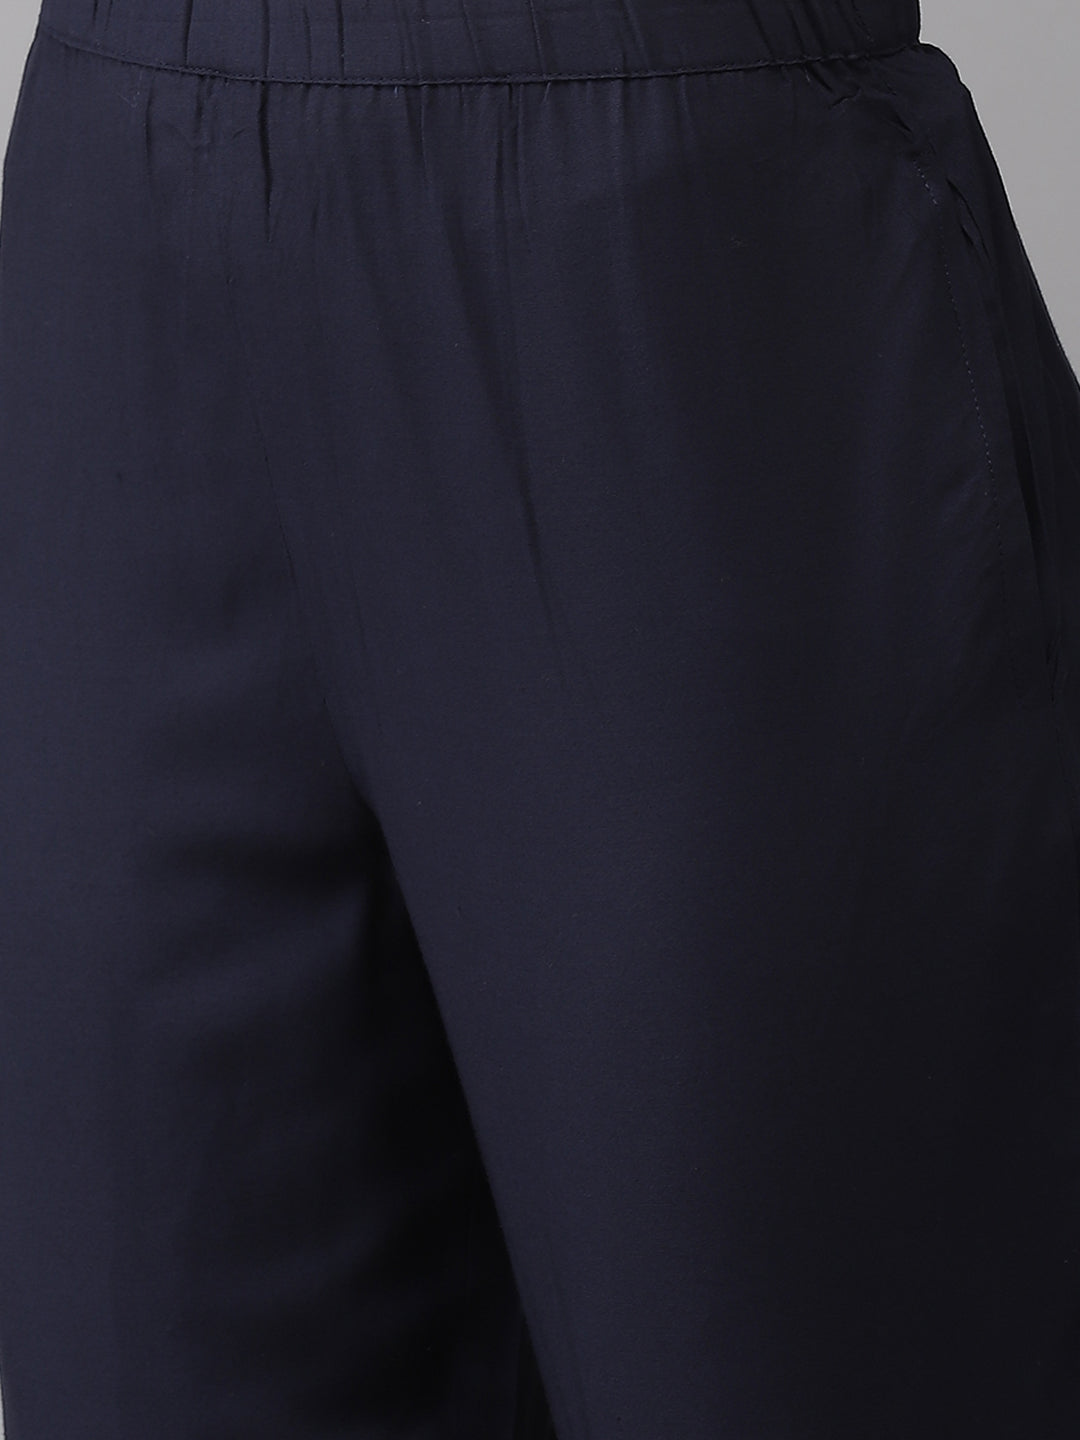 Ishin Women's Viscose Rayon Navy Blue Embroidered A-Line Kurta Trouser Dupatta Set